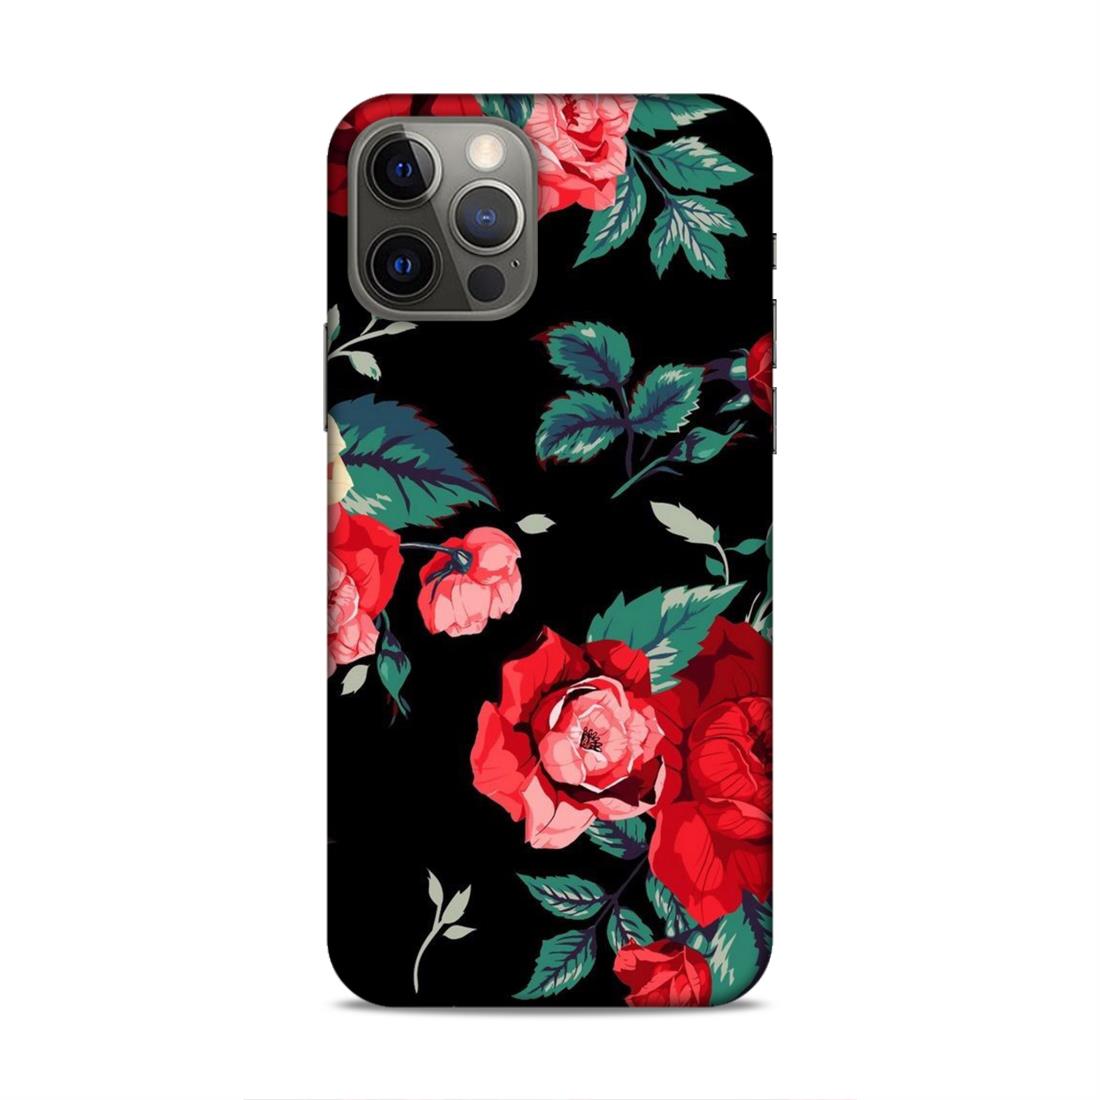 Flower Hard Back Case For Apple iPhone 12 / 12 Pro